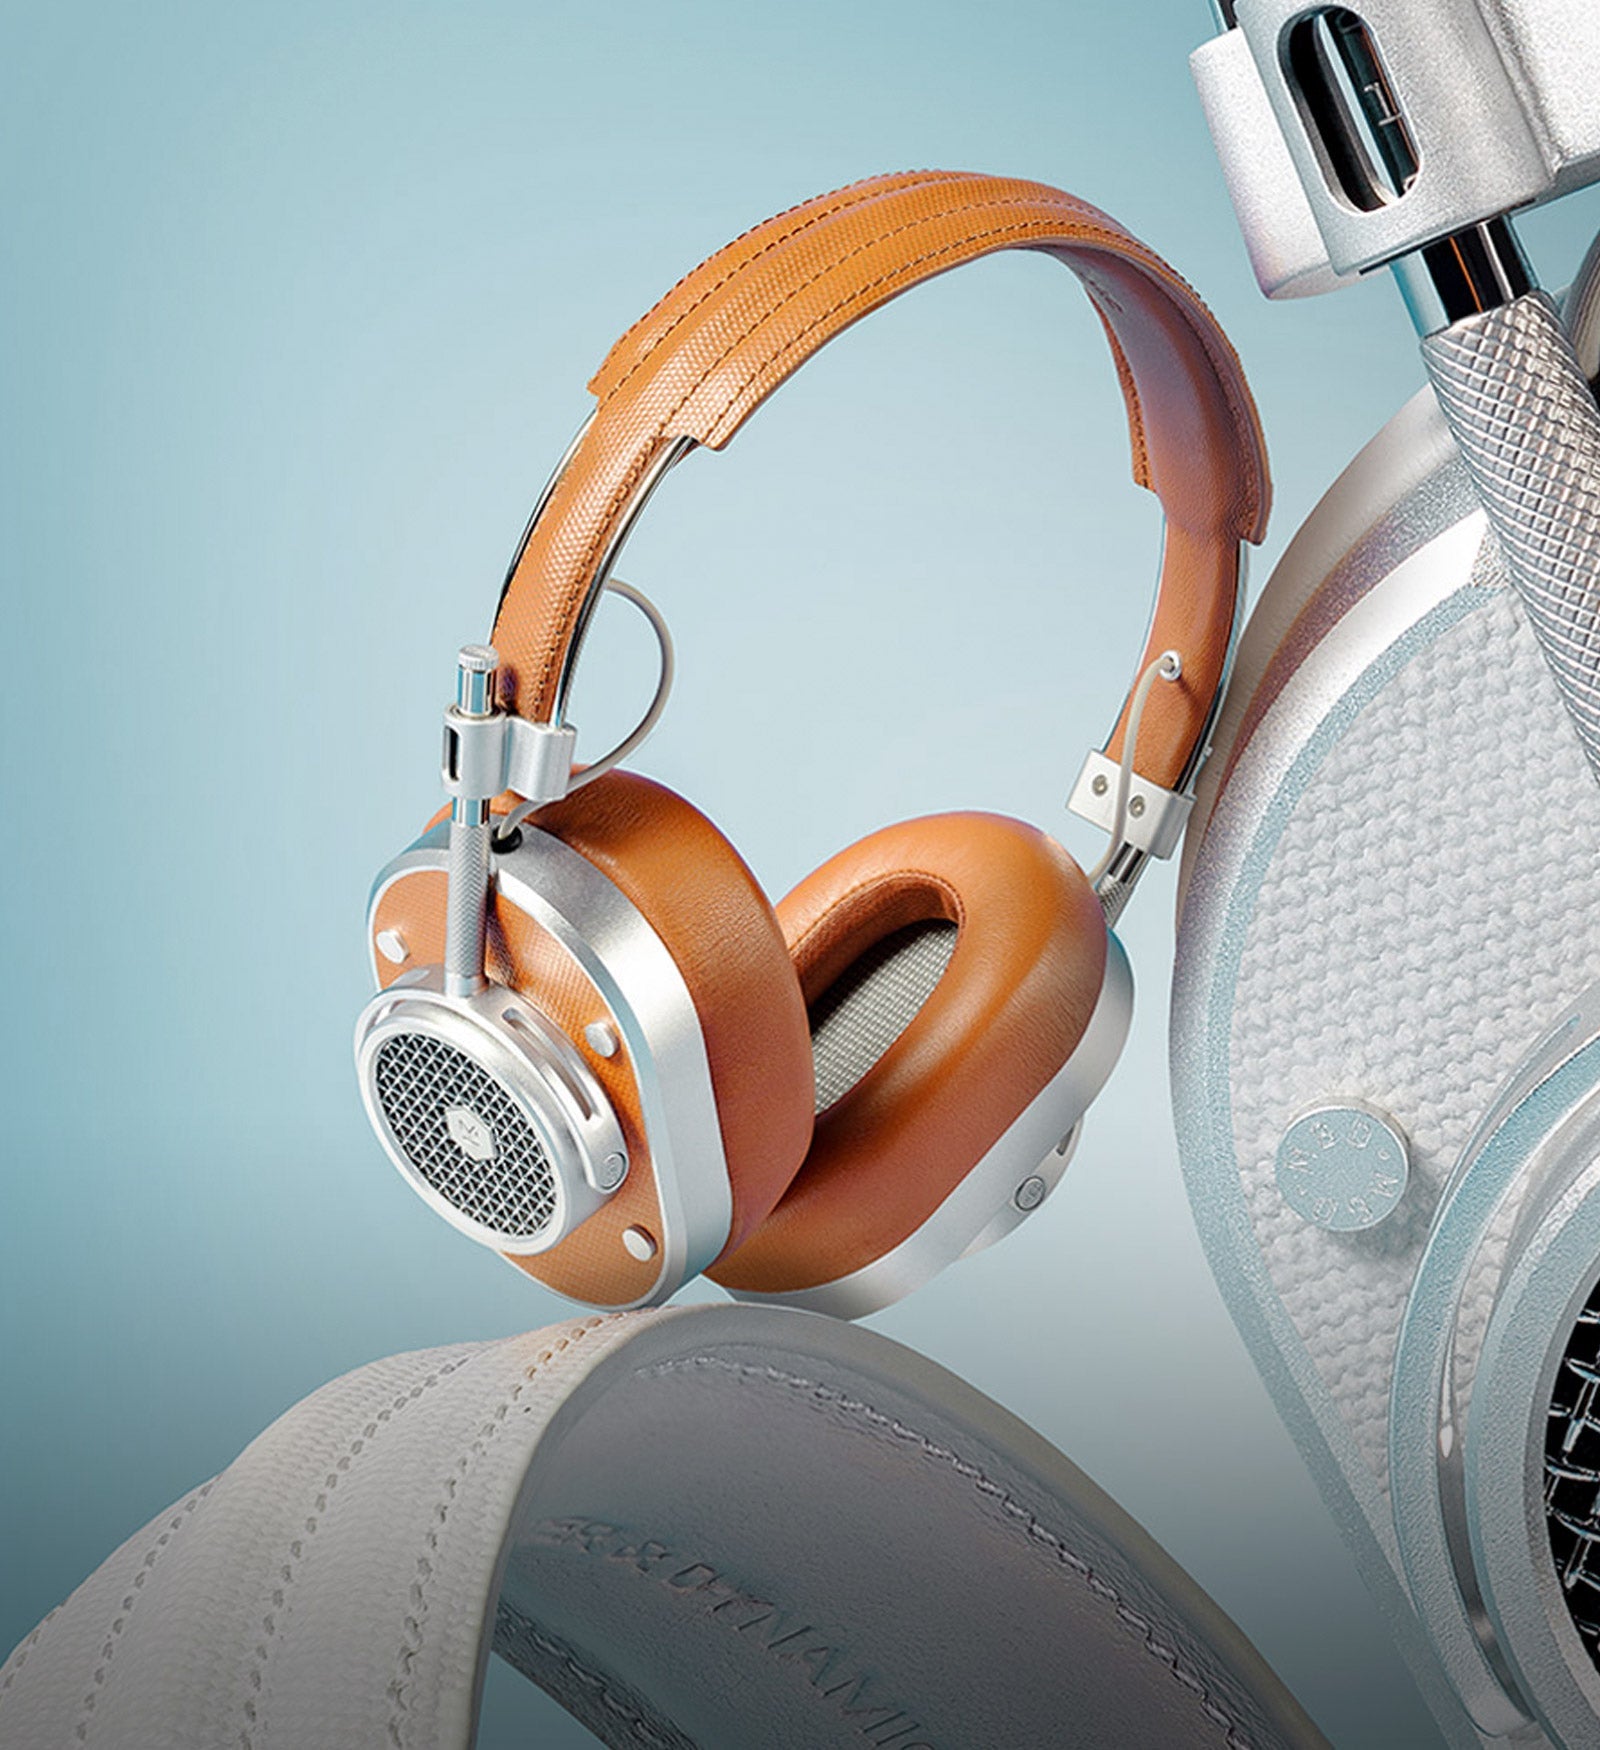 Professional Headphones & Luxury Earphones | Master & Dynamic Official